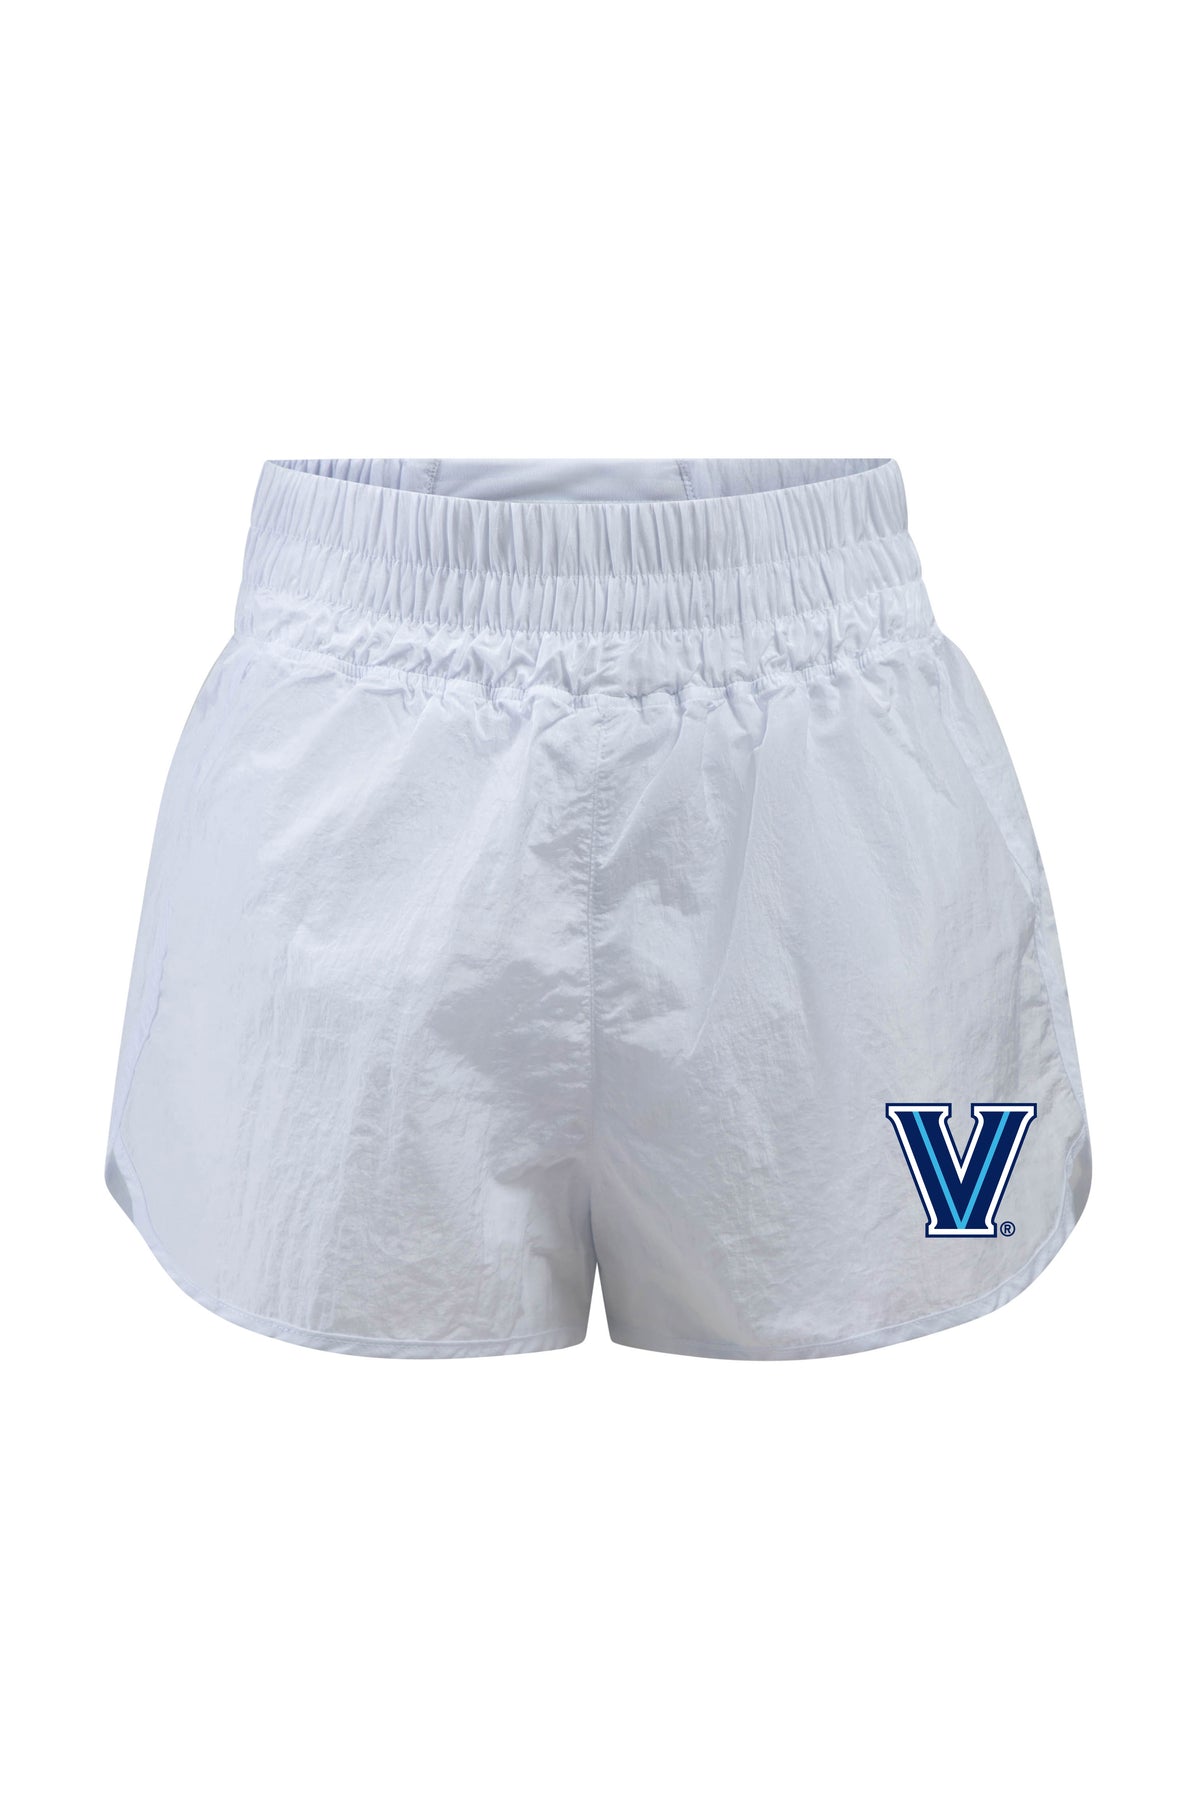 Villanova University Boxer Short